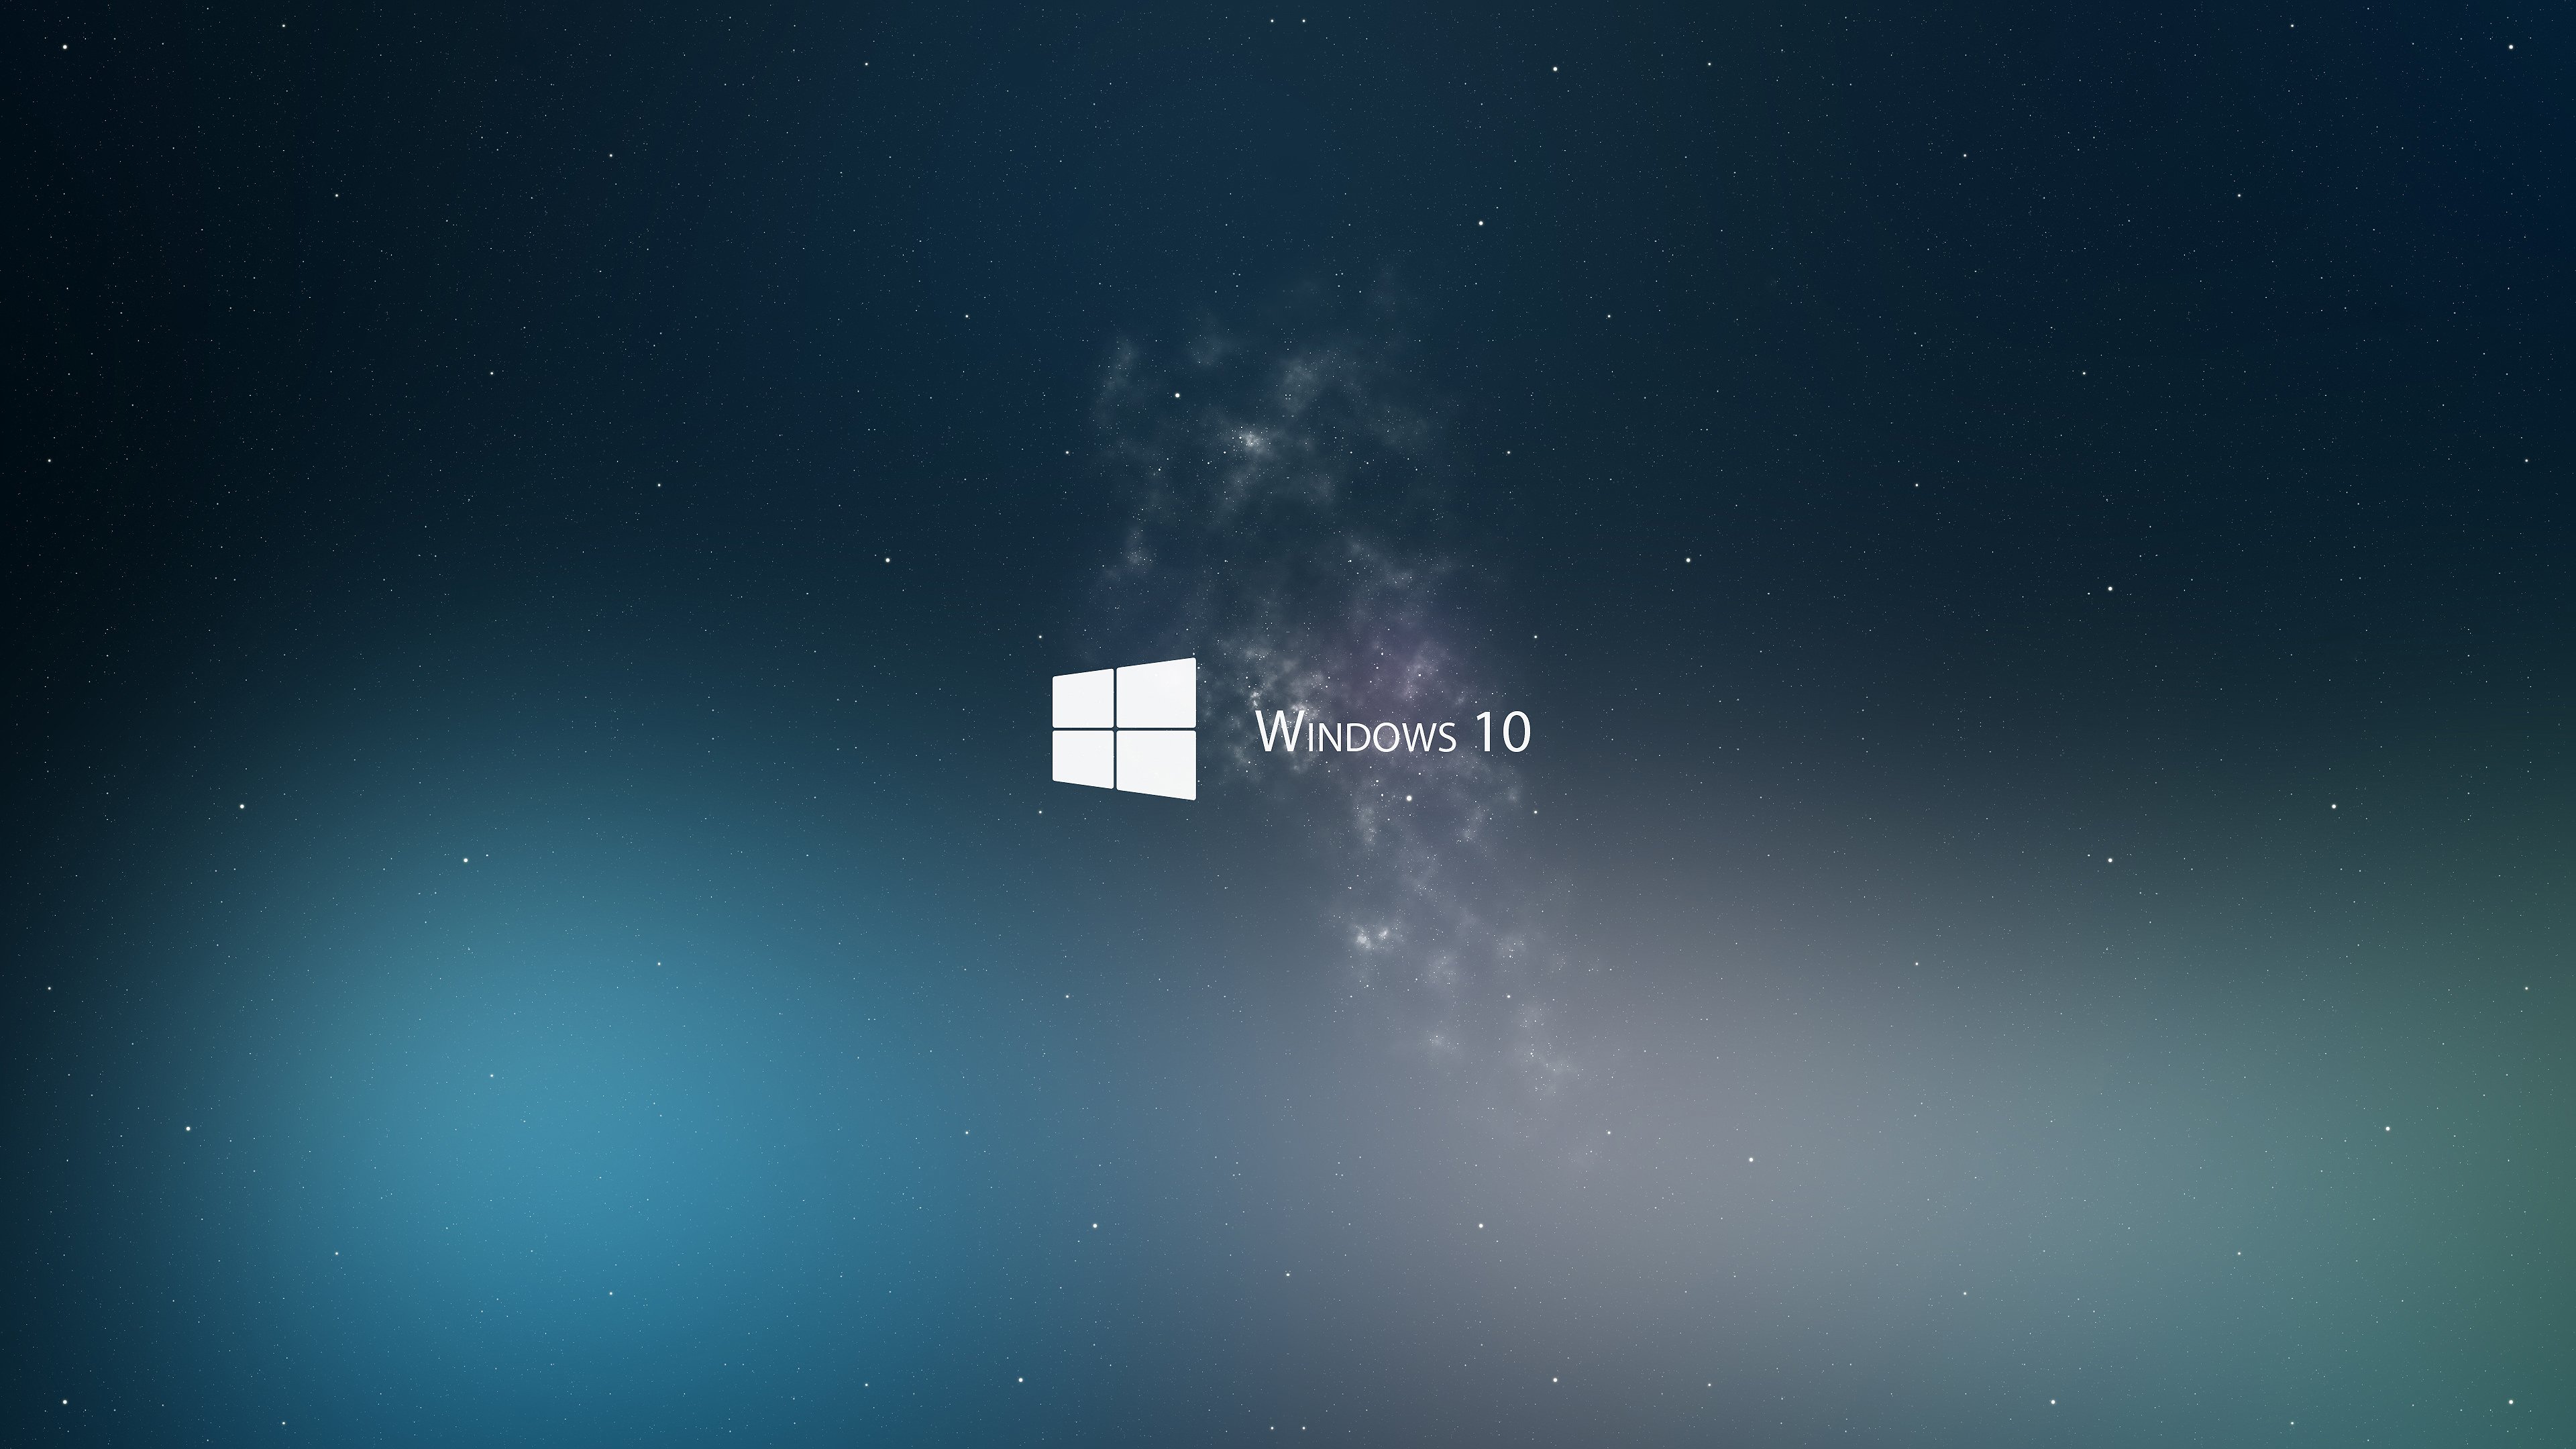 Windows 10 Wallpaper for Desktop 4K 3840x2160